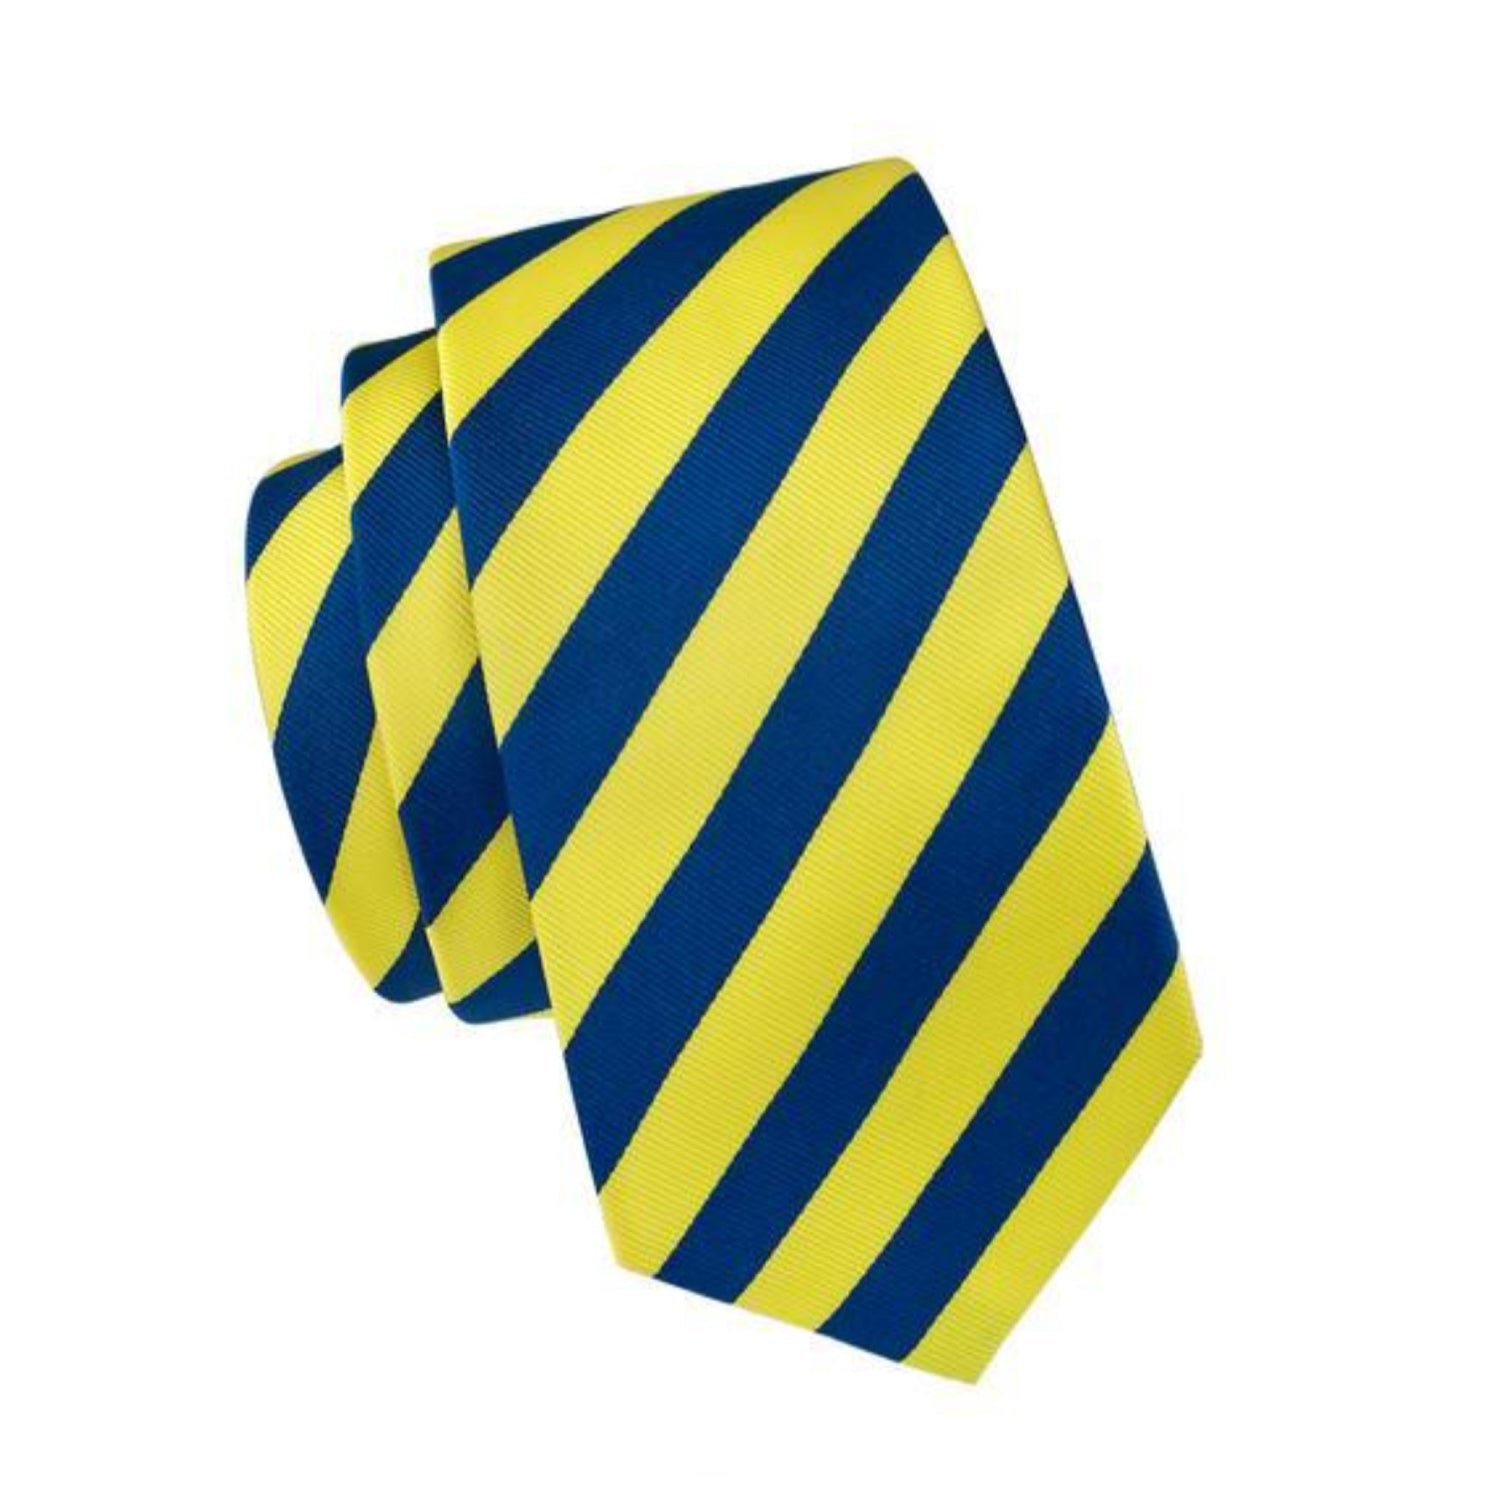 Single Tie: Yellow and Blue Stripe Tie